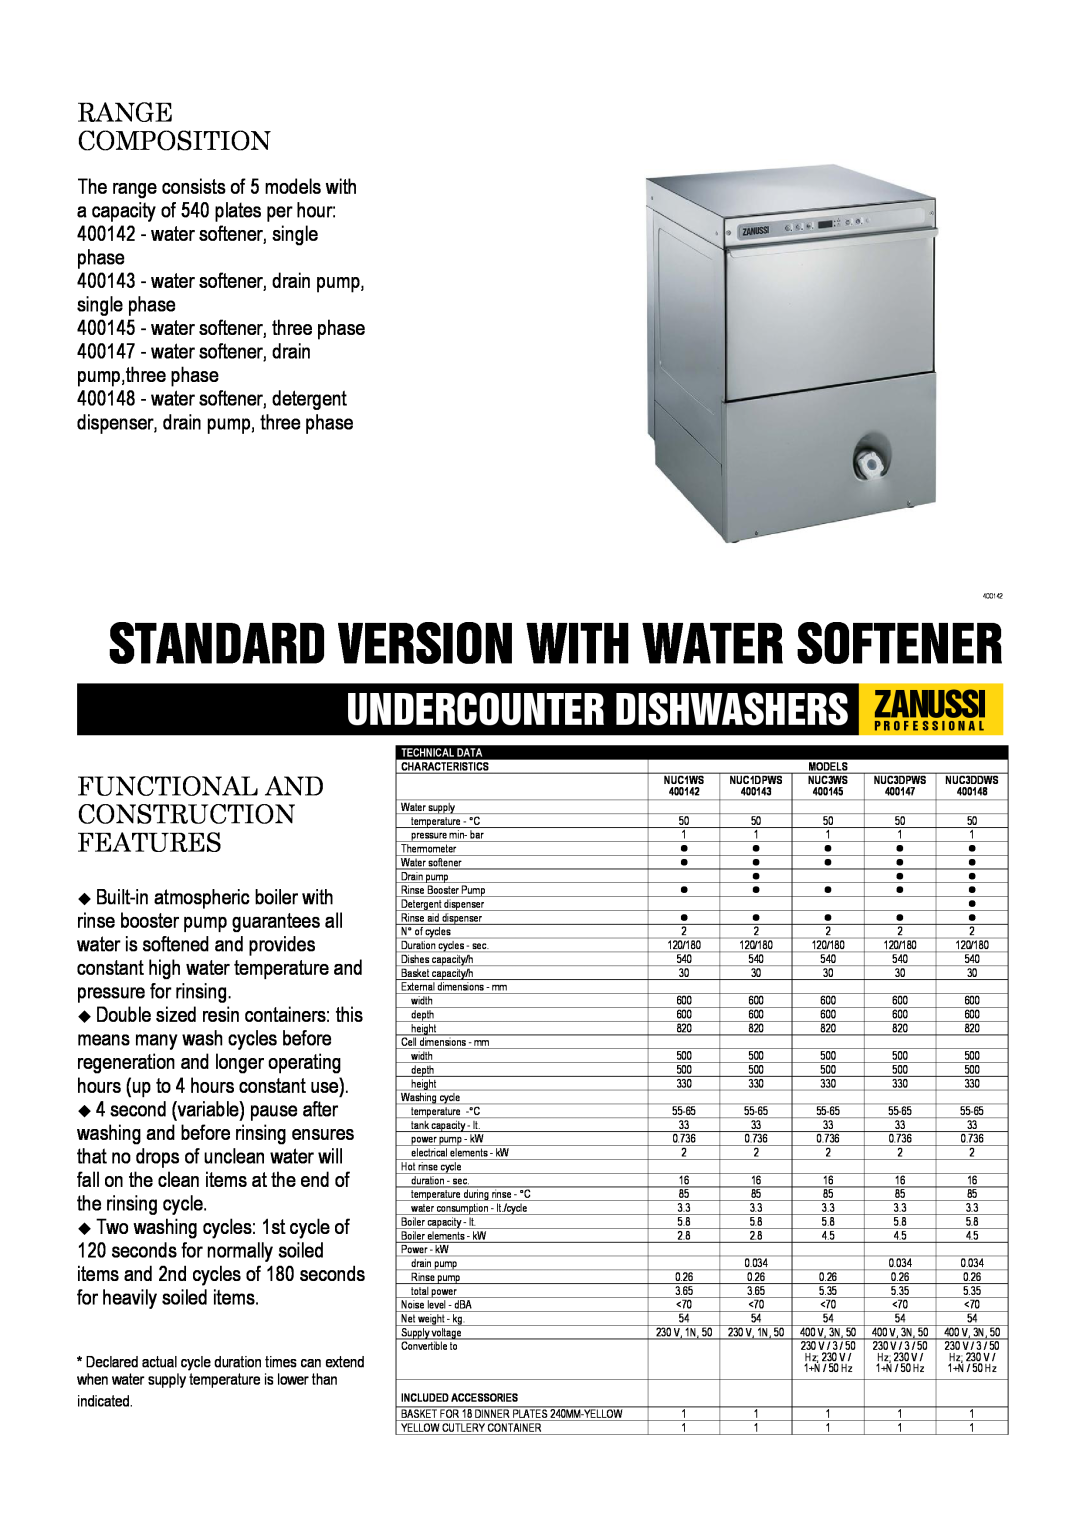 Electrolux NUC3DPWS, NUC1DPWS, NUC3WS, NUC3DDWS, NUC1WS dimensions Standard Version With Water Softener, Range Composition 